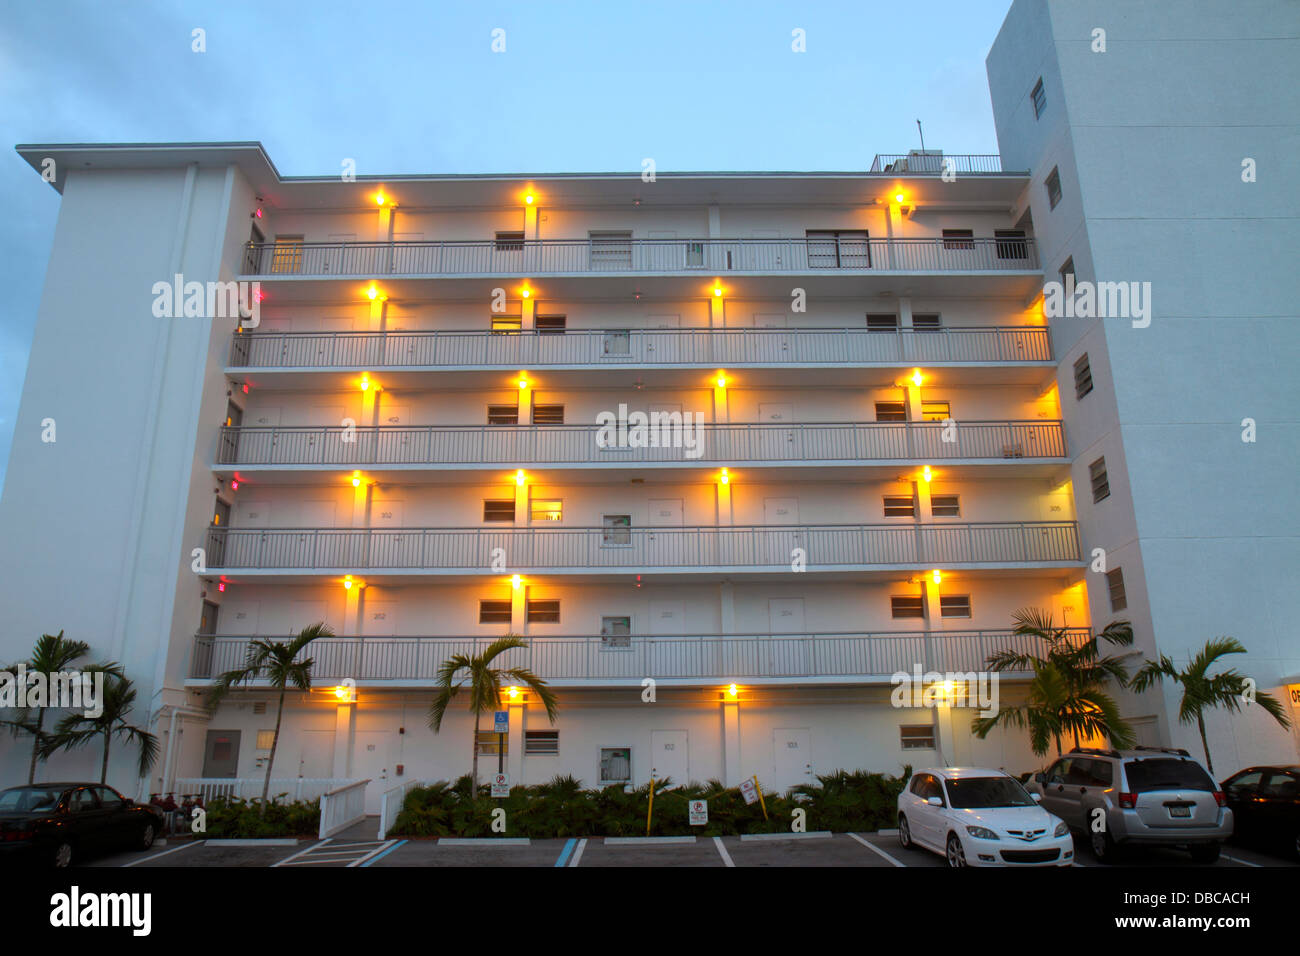 Fort Ft. Lauderdale Florida,Bahia Beach,hotel,condominium residential apartment apartments building buildings housing,rental,building,balconies,lookin Stock Photo